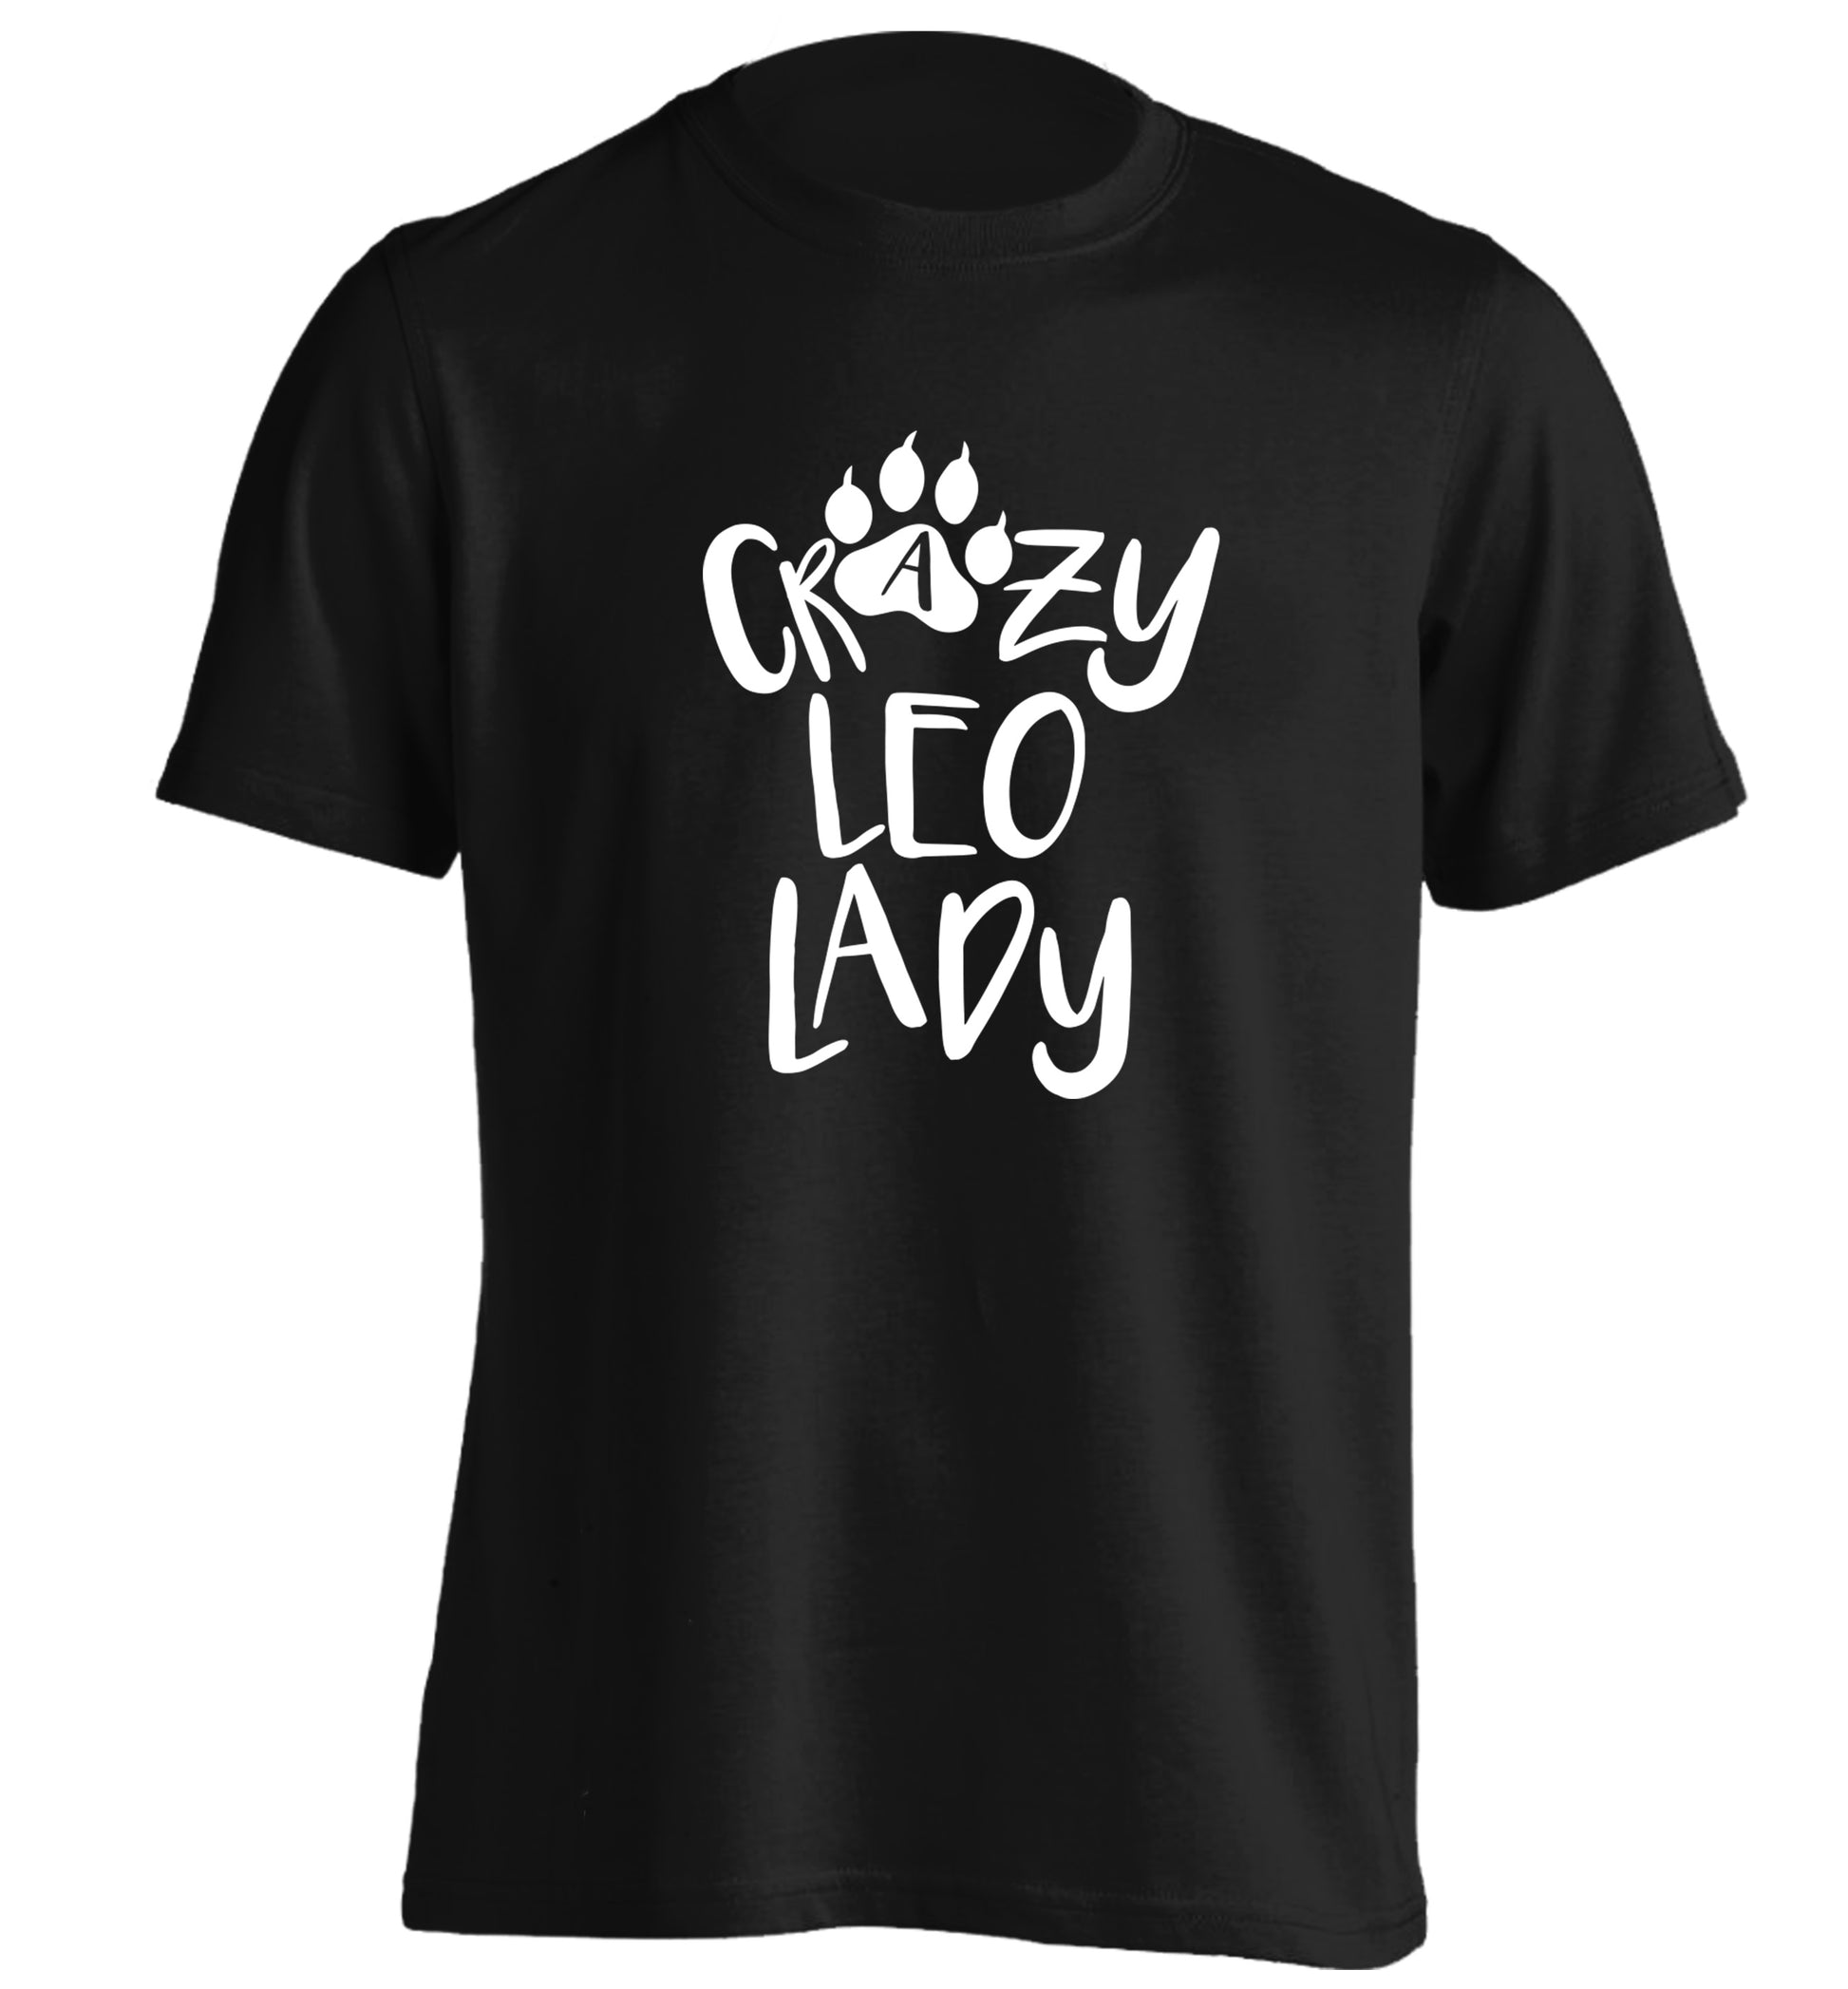 Crazy leo lady adults unisex black Tshirt 2XL